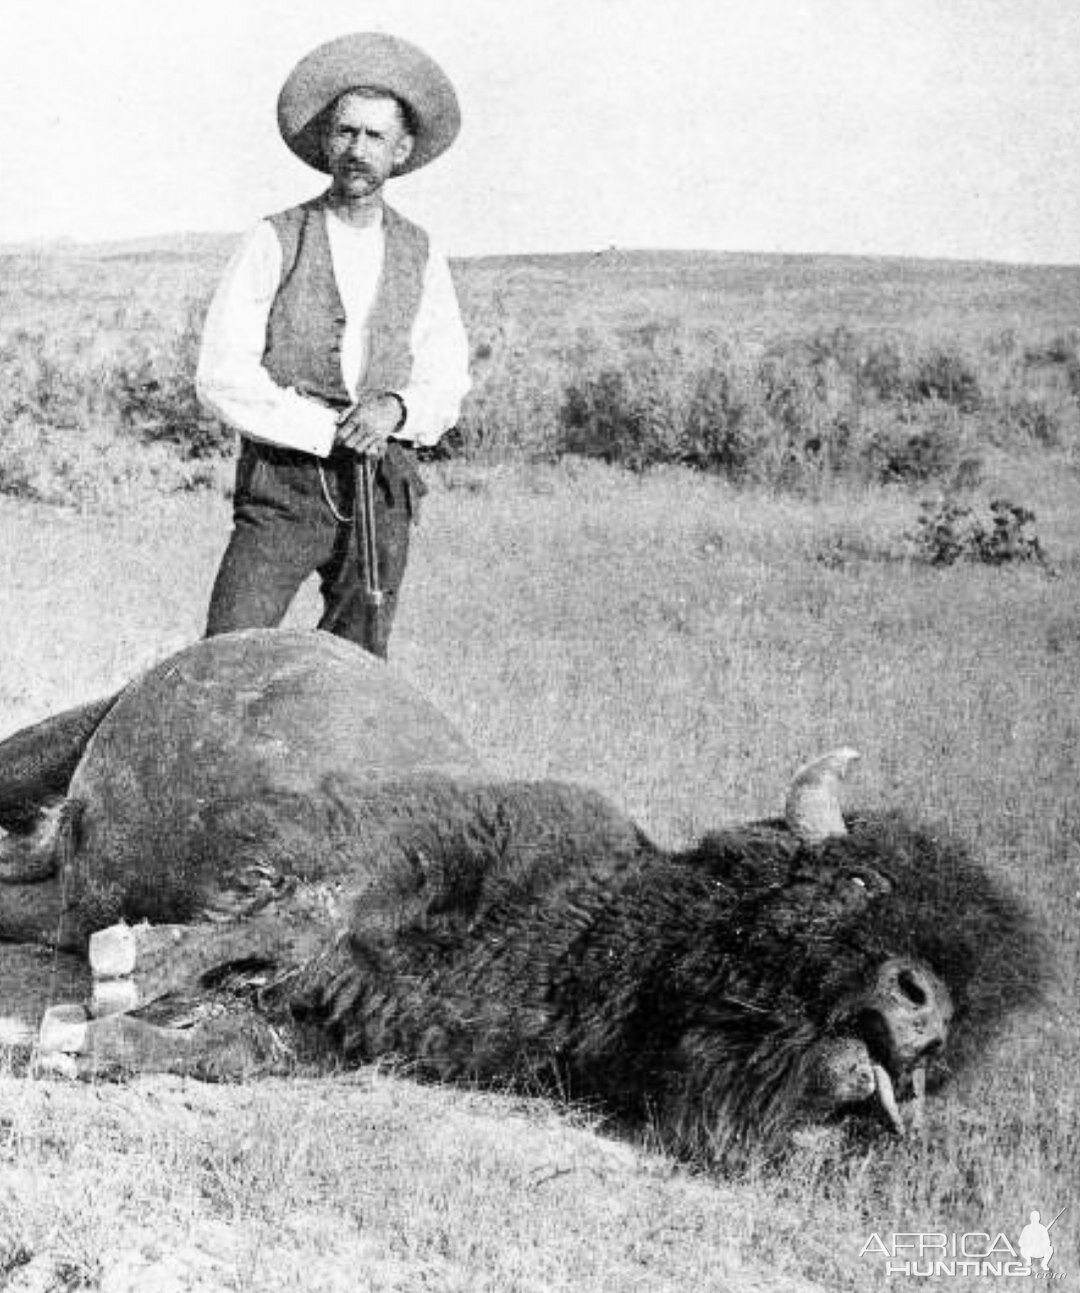 Buffalo hunt in Montana